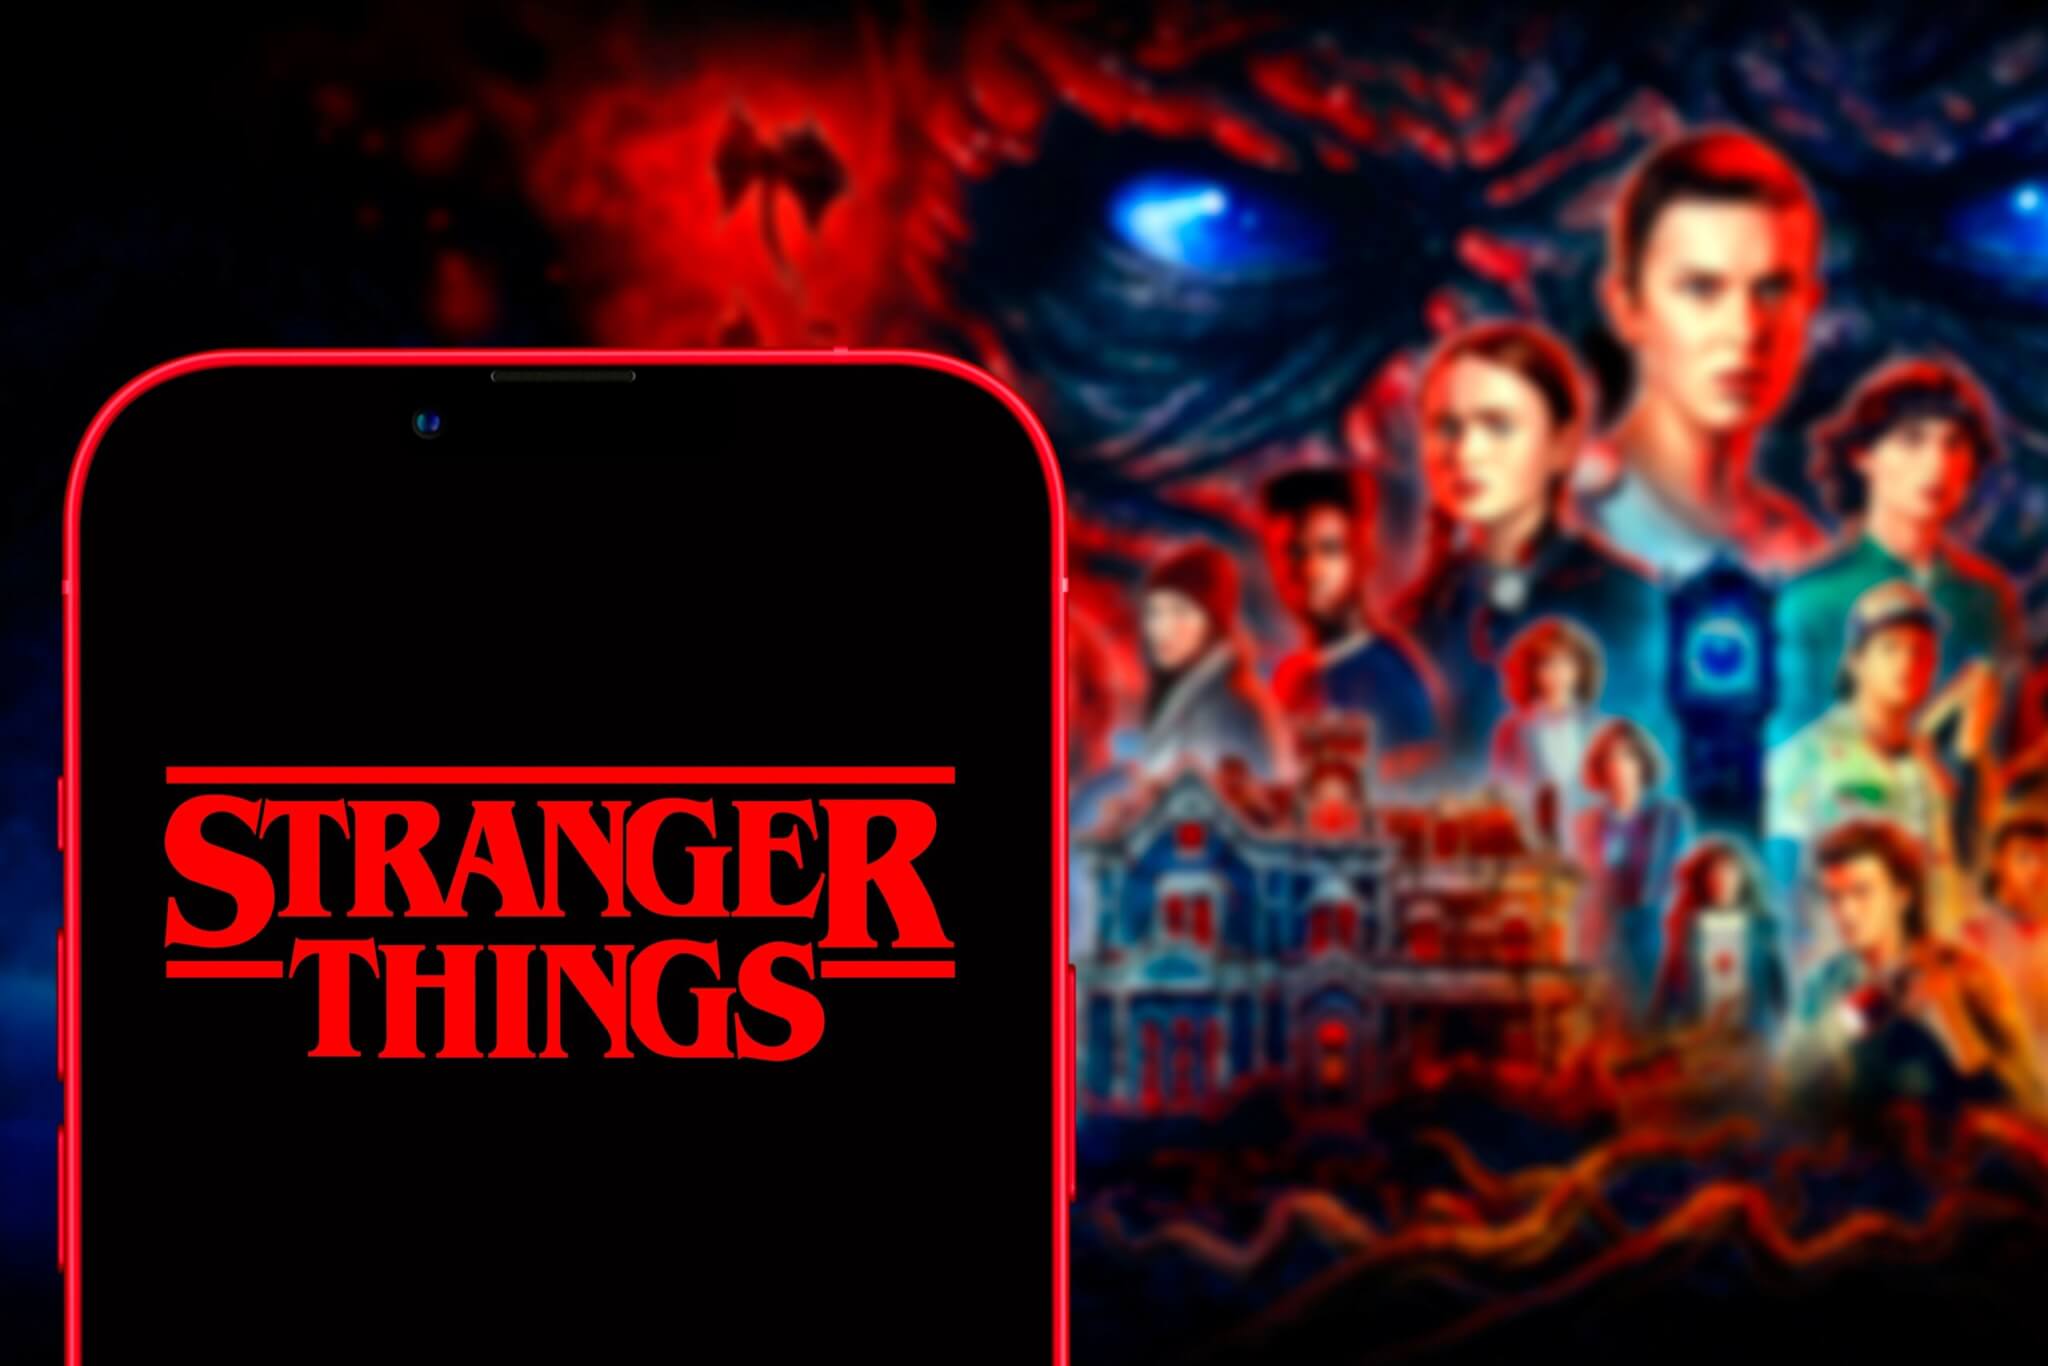 Stranger Things: Every Episode In Season 1, Ranked (According To IMDb)